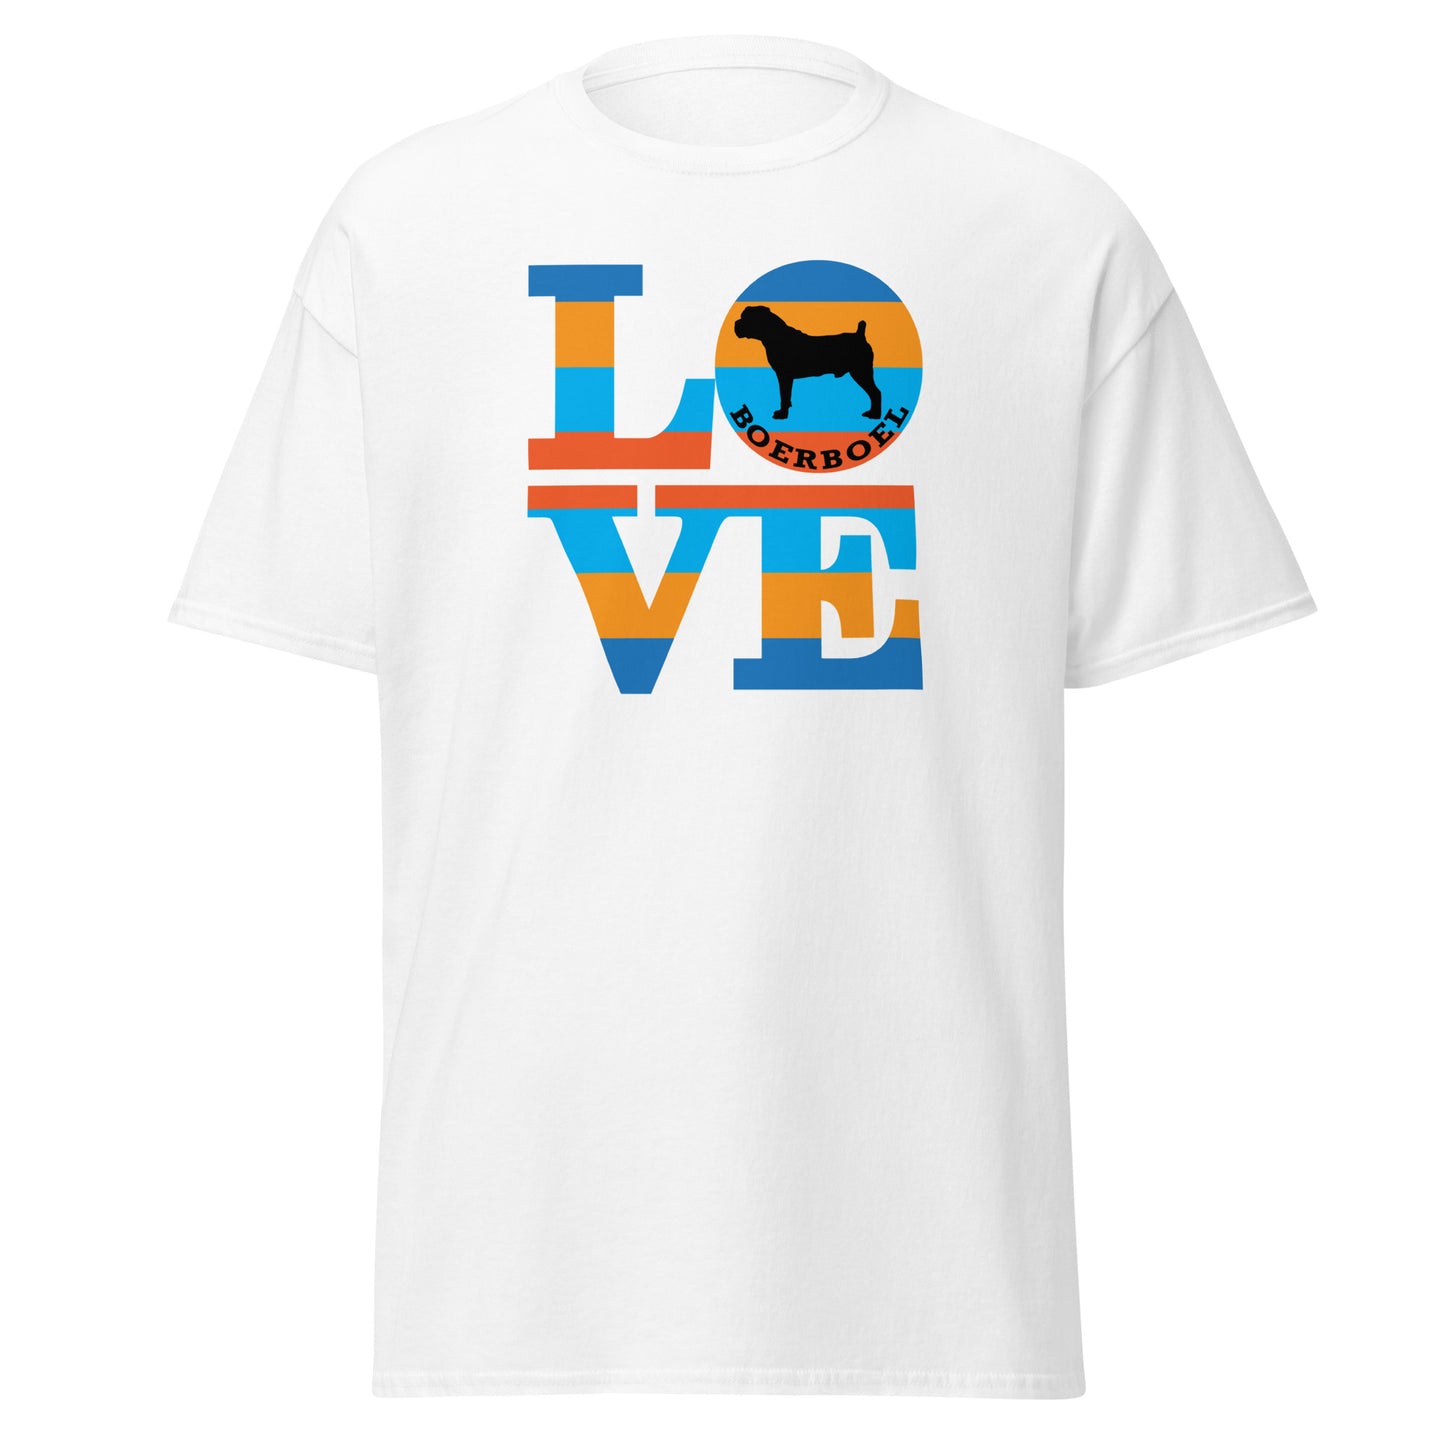 Boerboel Love men’s white t-shirt by Dog Artistry.